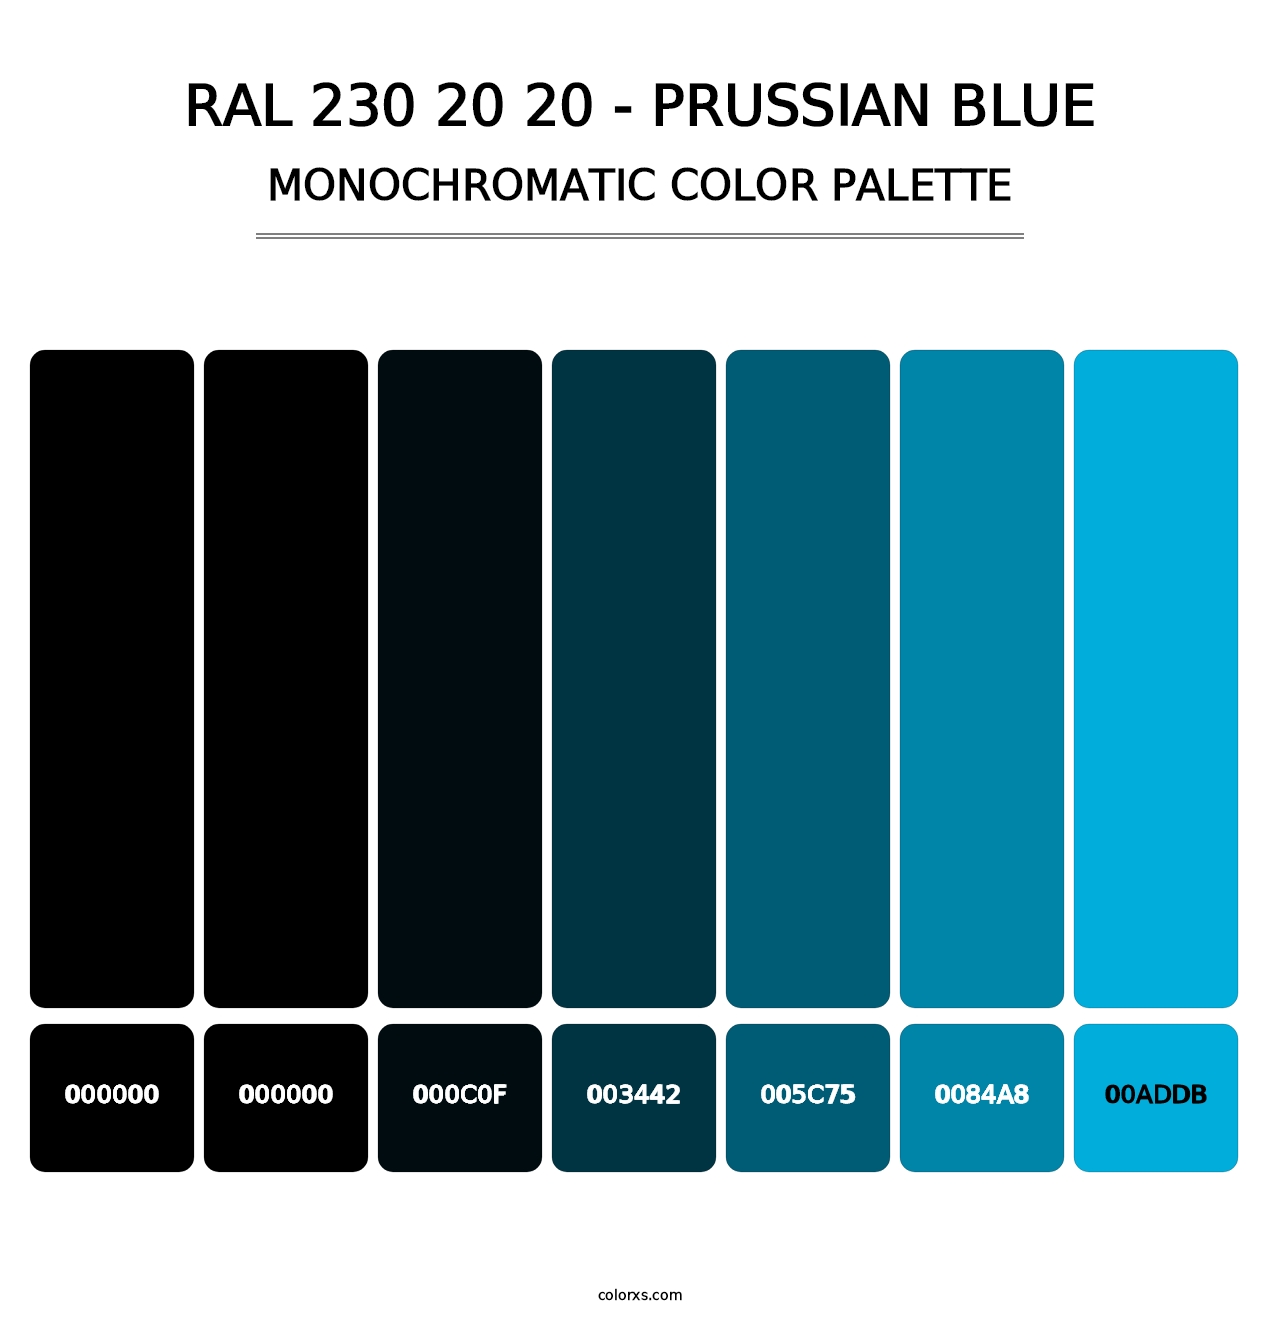 RAL 230 20 20 - Prussian Blue - Monochromatic Color Palette